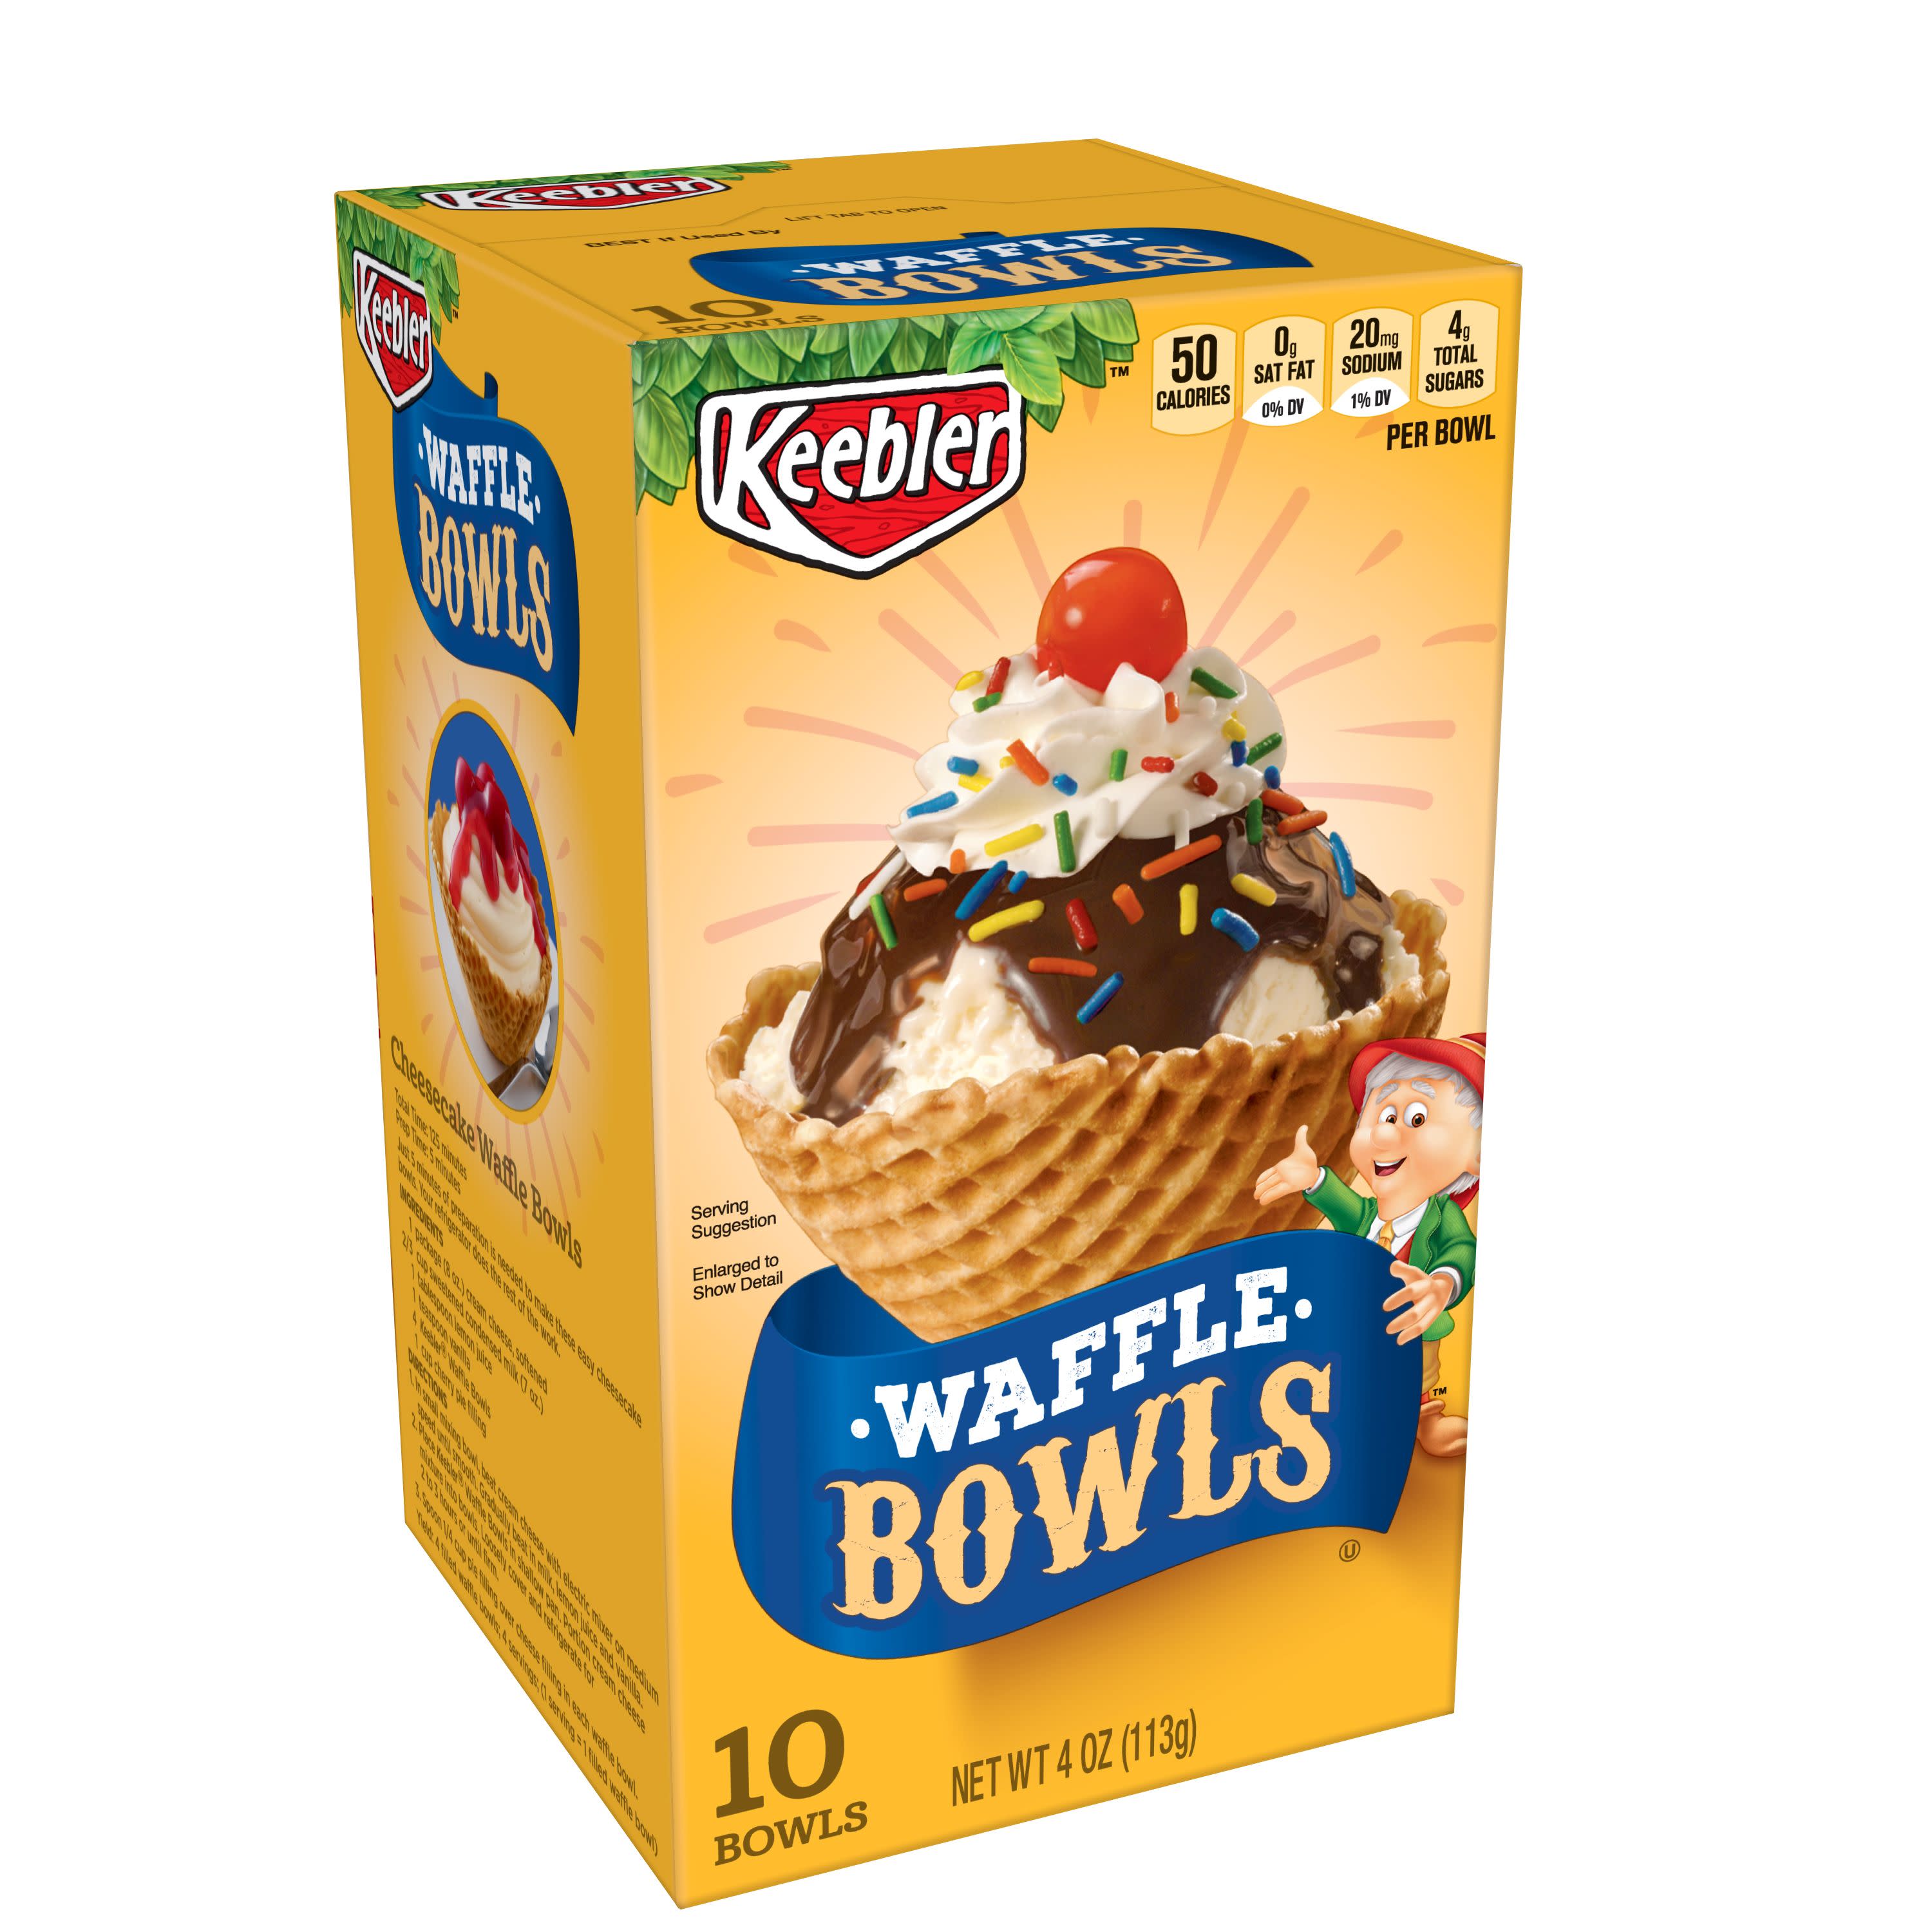 Keebler Waffle Bowls, 3 Oz., 10 Count - image 1 of 7